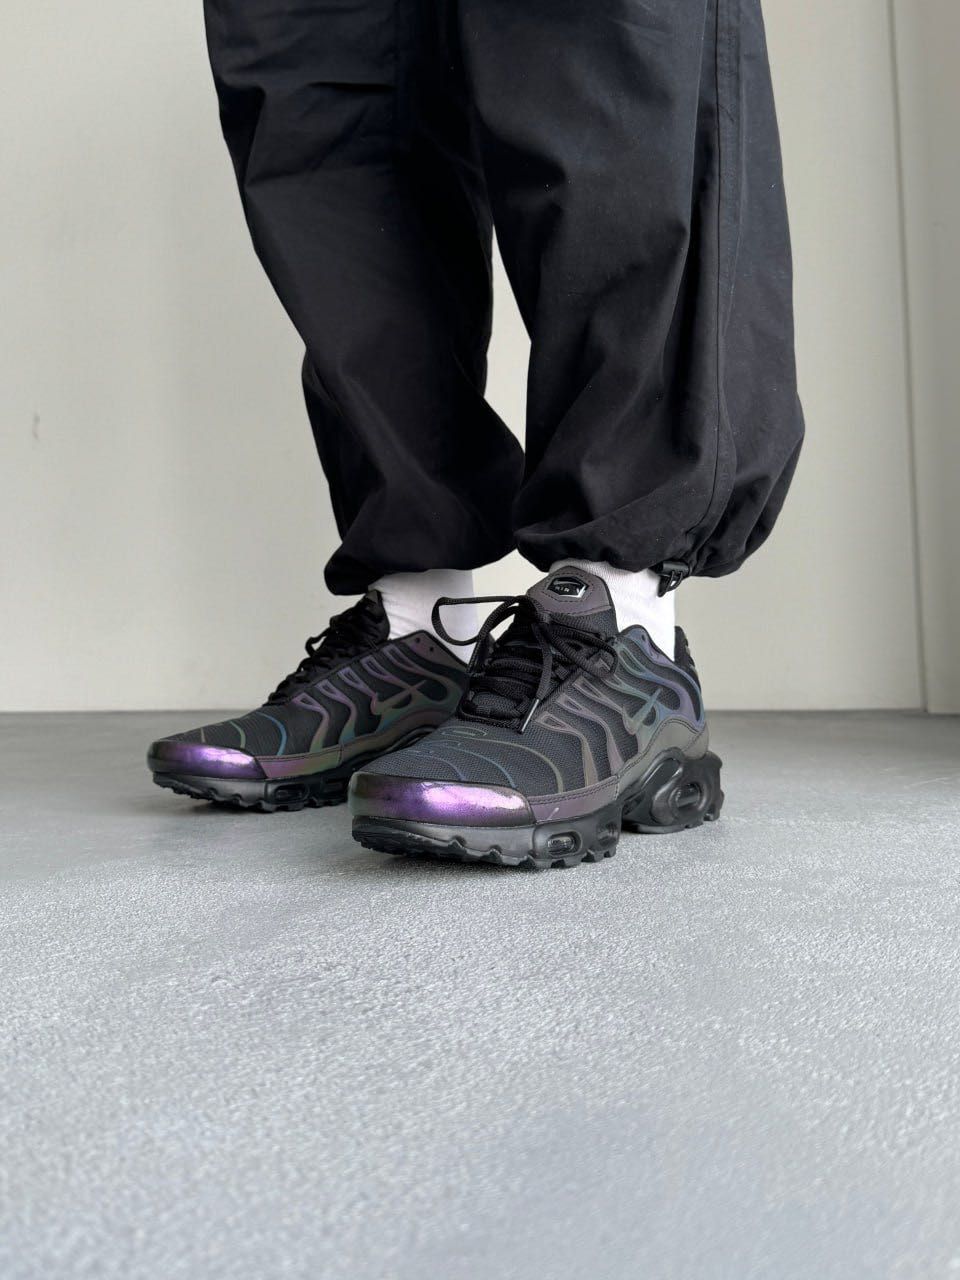 Мужские кроссовки Nike Air Max TN Plus Black Chameleon. Размеры 41-46